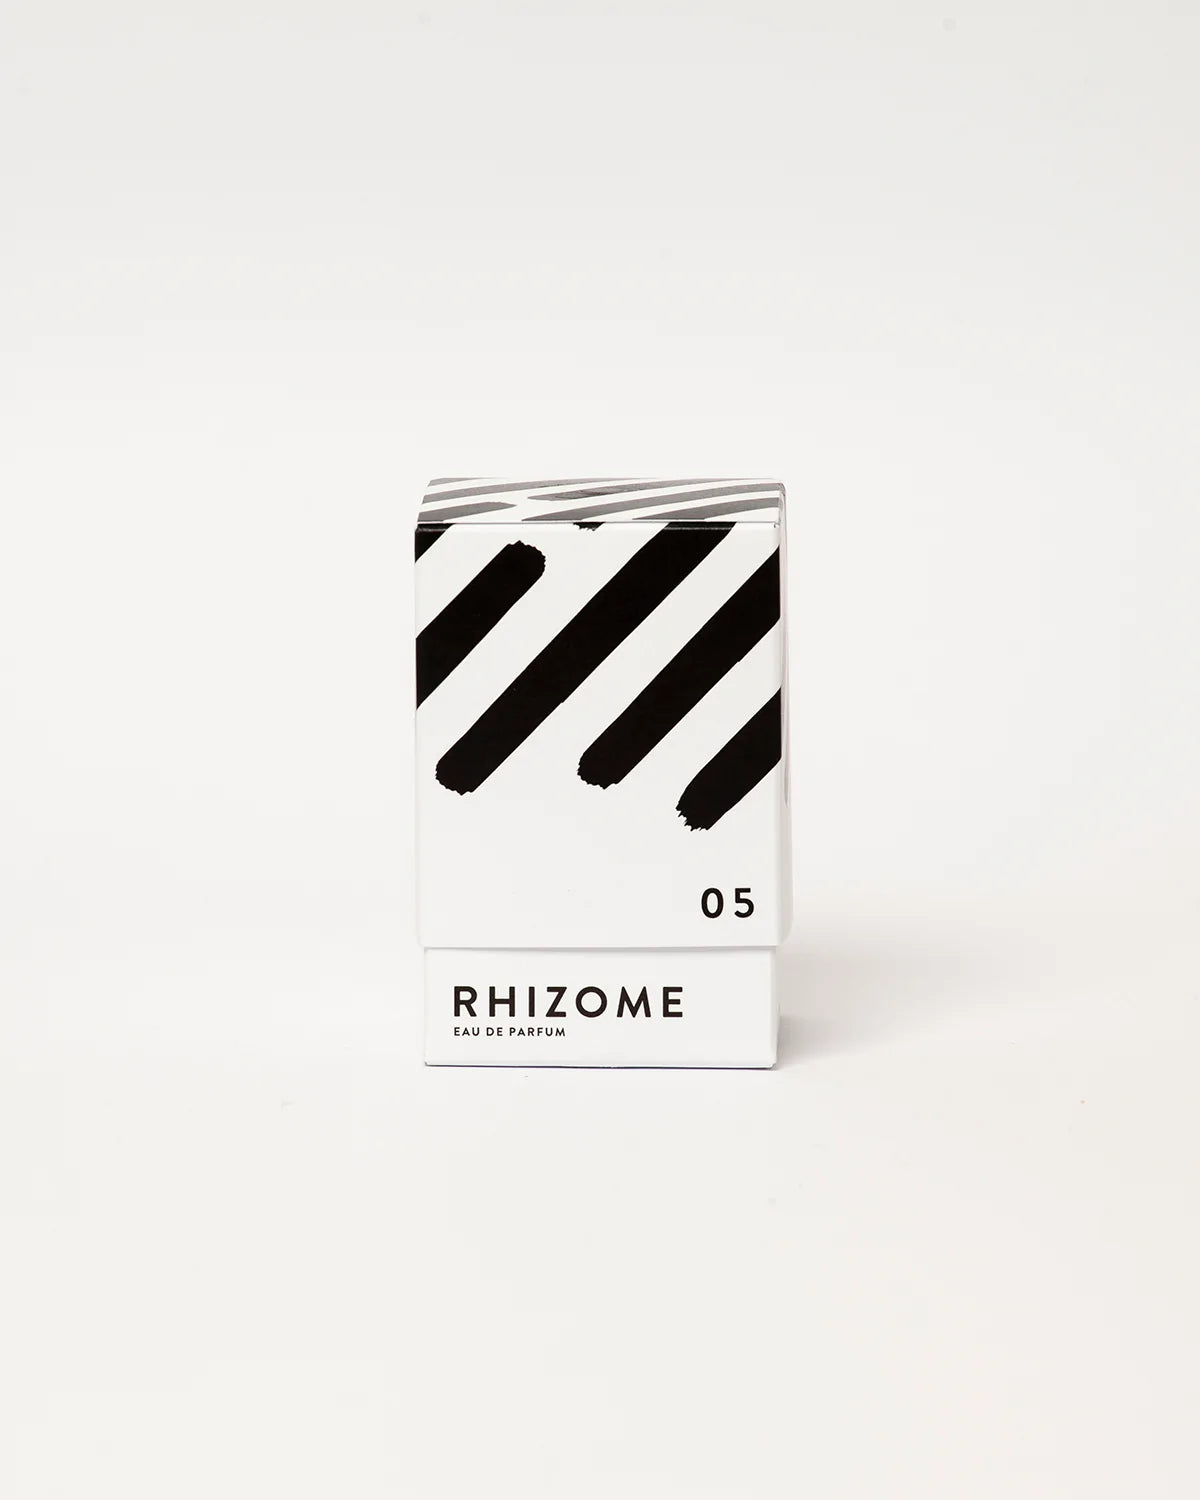 RHIZOME 05 is a spicy and fresh scented Eau de Parfum.